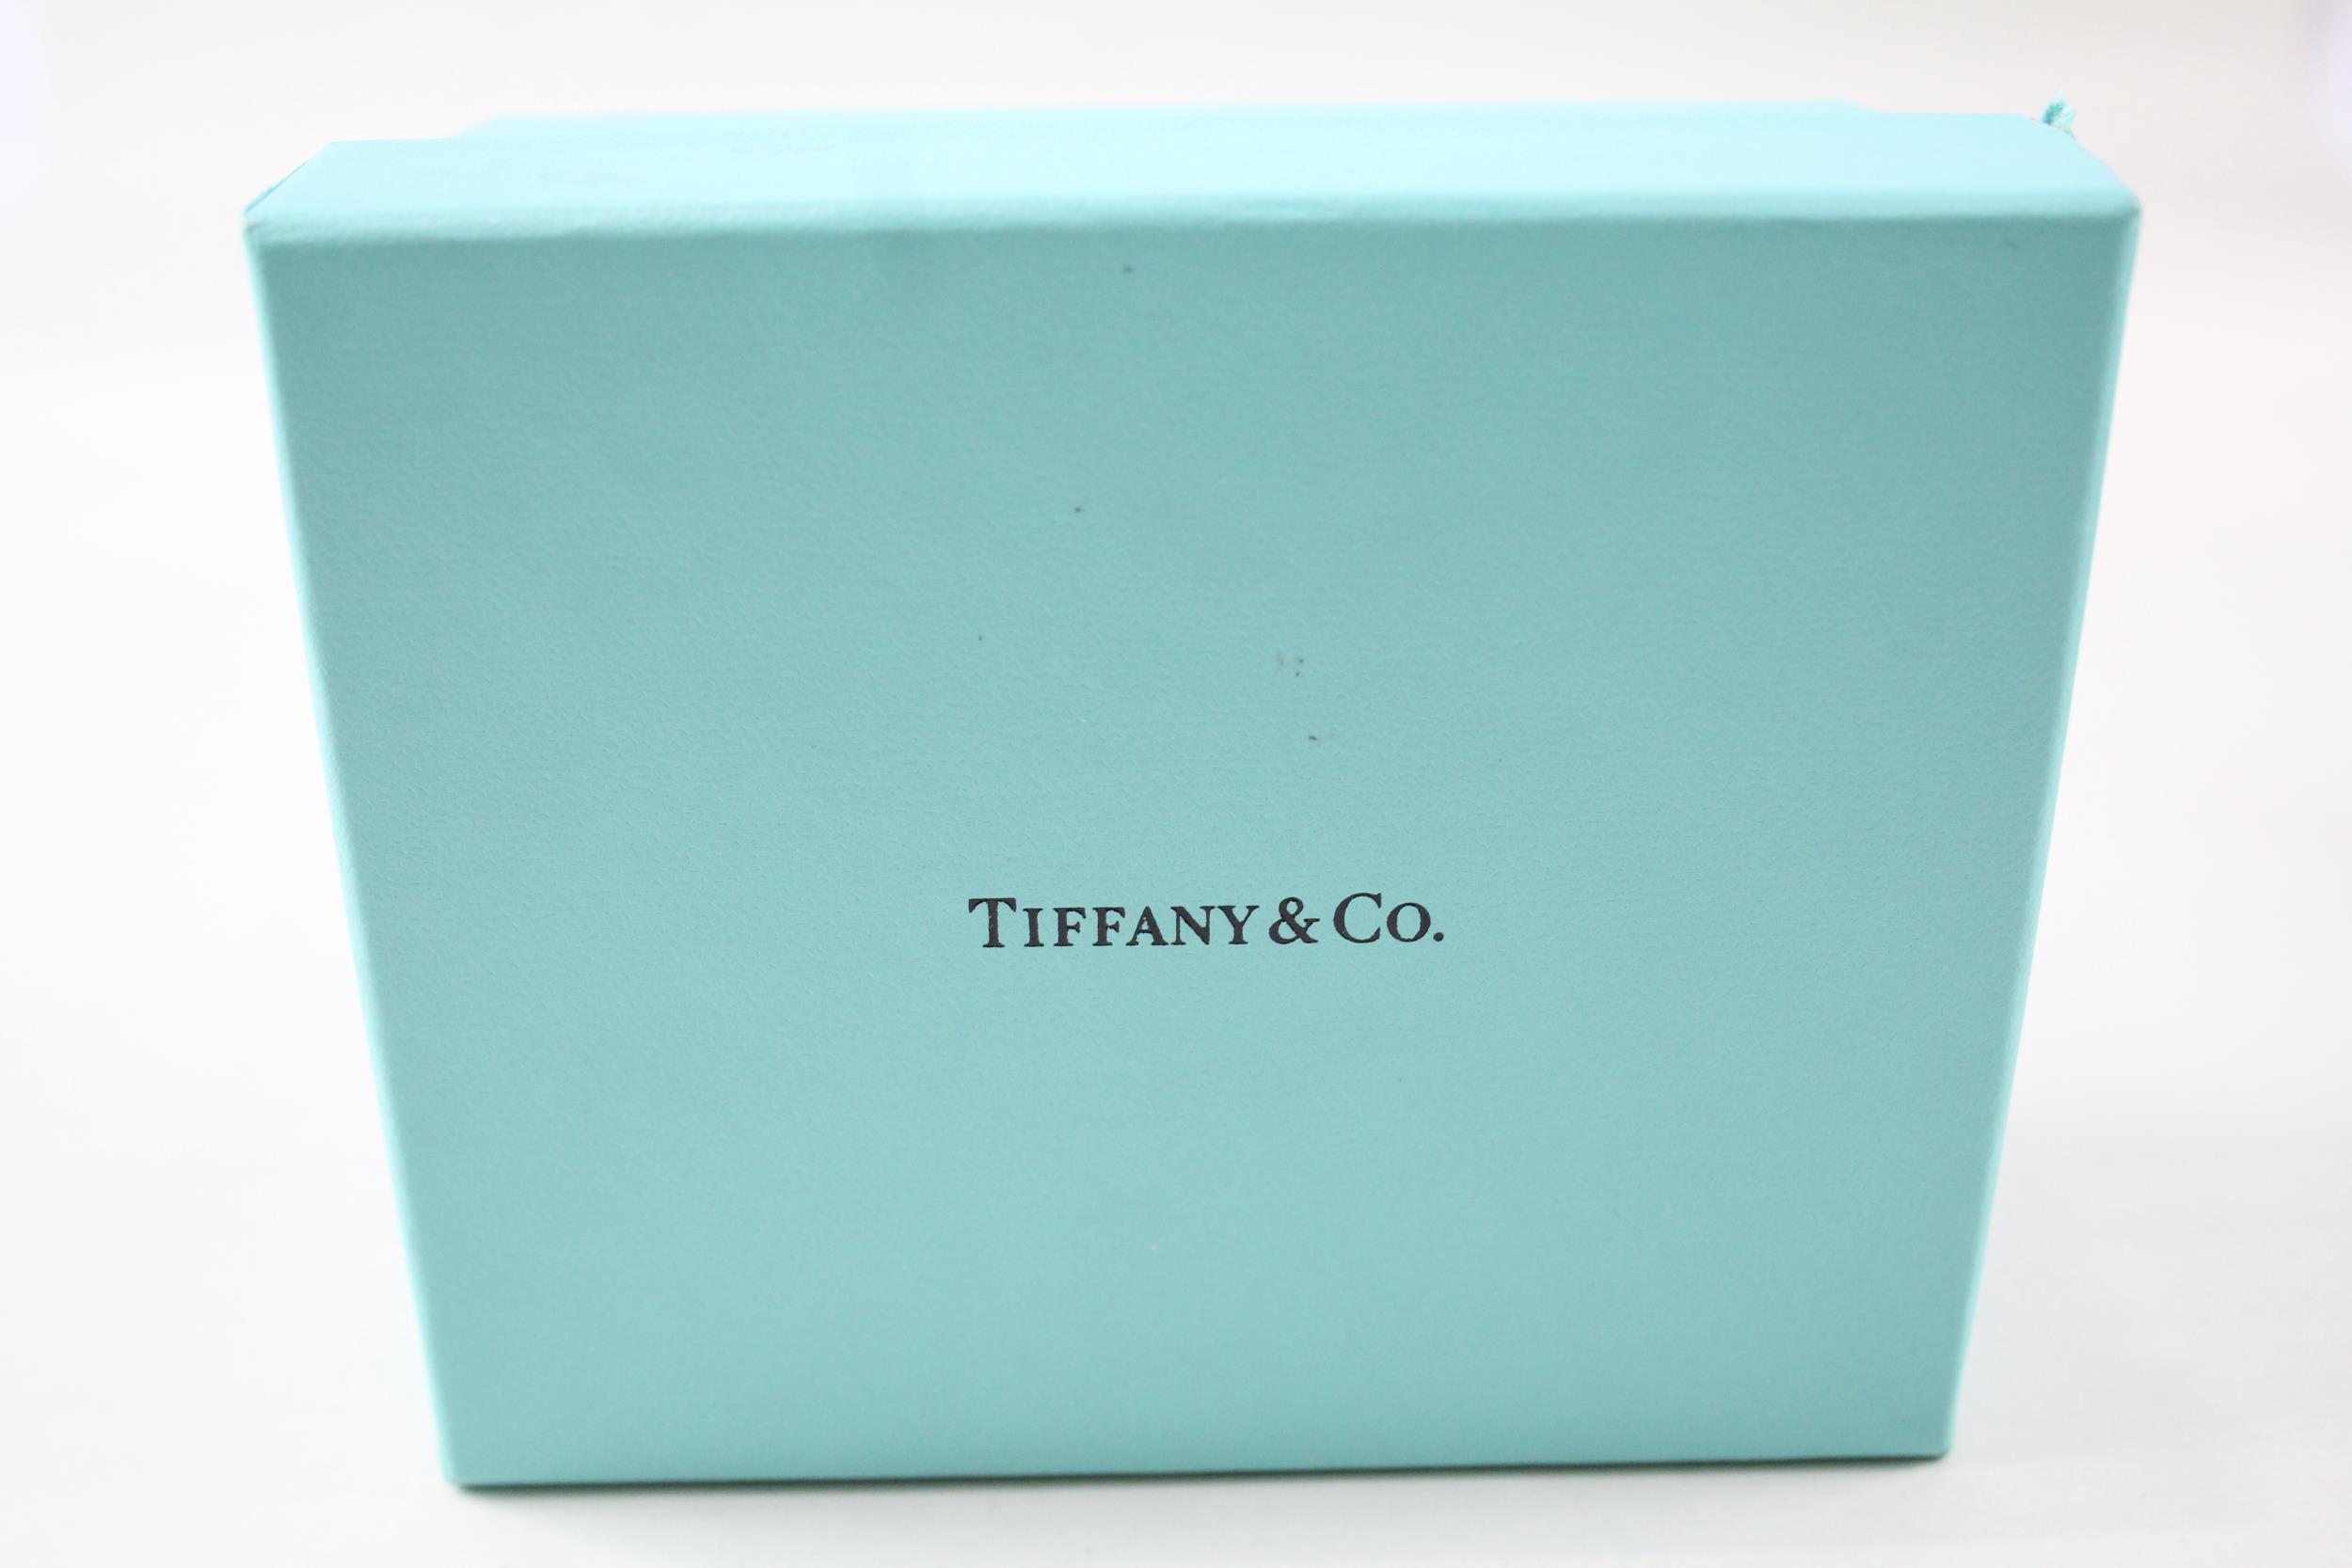 Silver cuff bangle by designer Tiffany & Co w/ box (47g) - Image 6 of 6